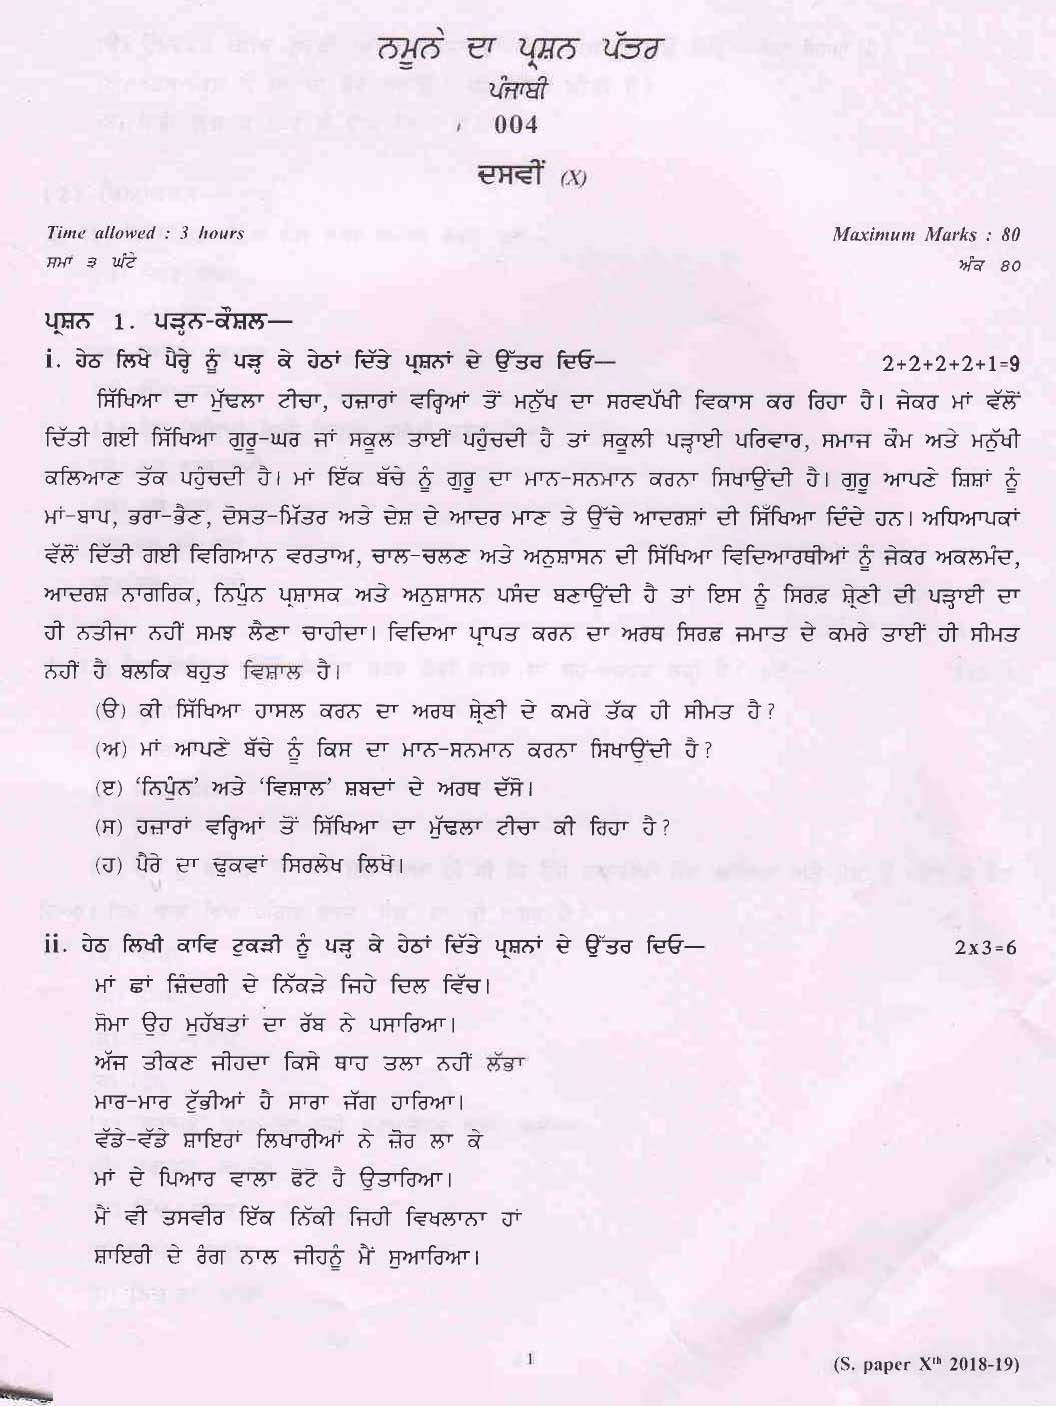 Punjabi CBSE Class X Sample Question Paper 2018-19 - Image 1